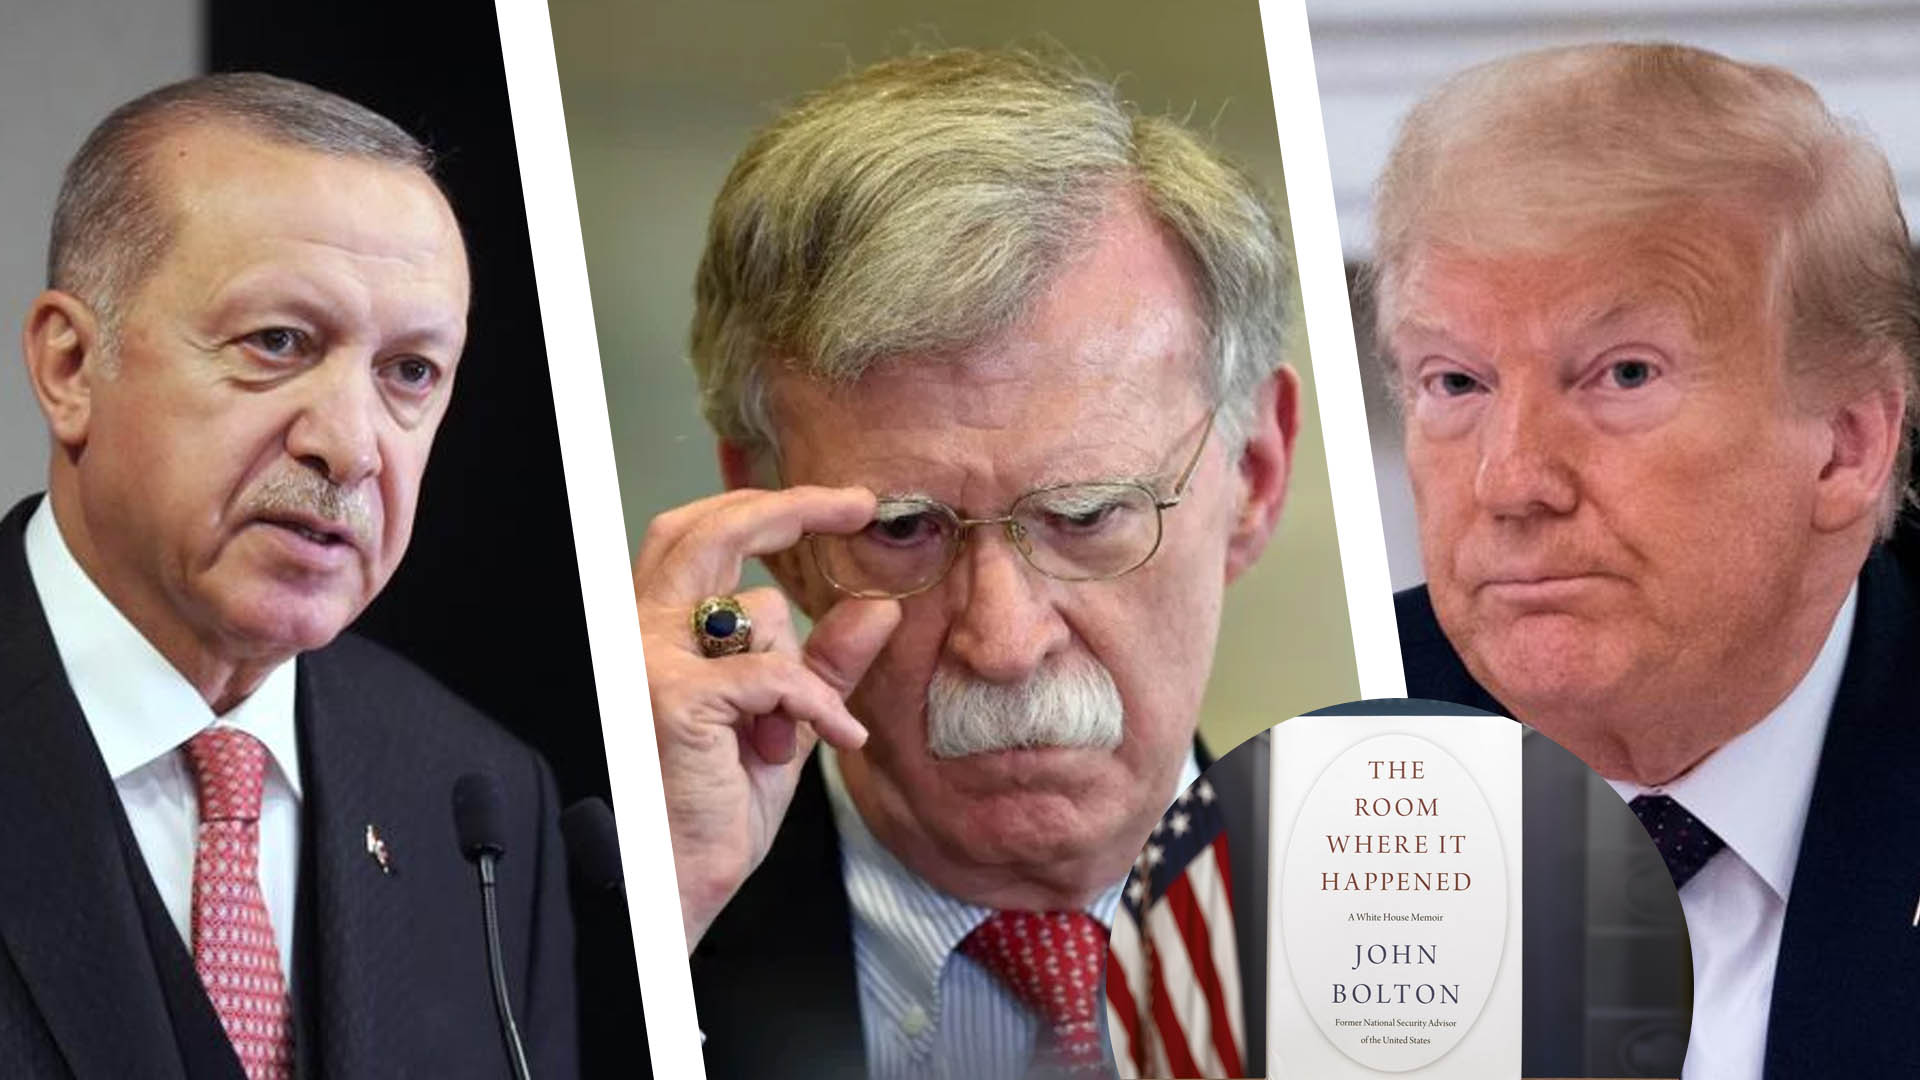 Turkey: Bolton’s New Book is ‘Reprehensible’